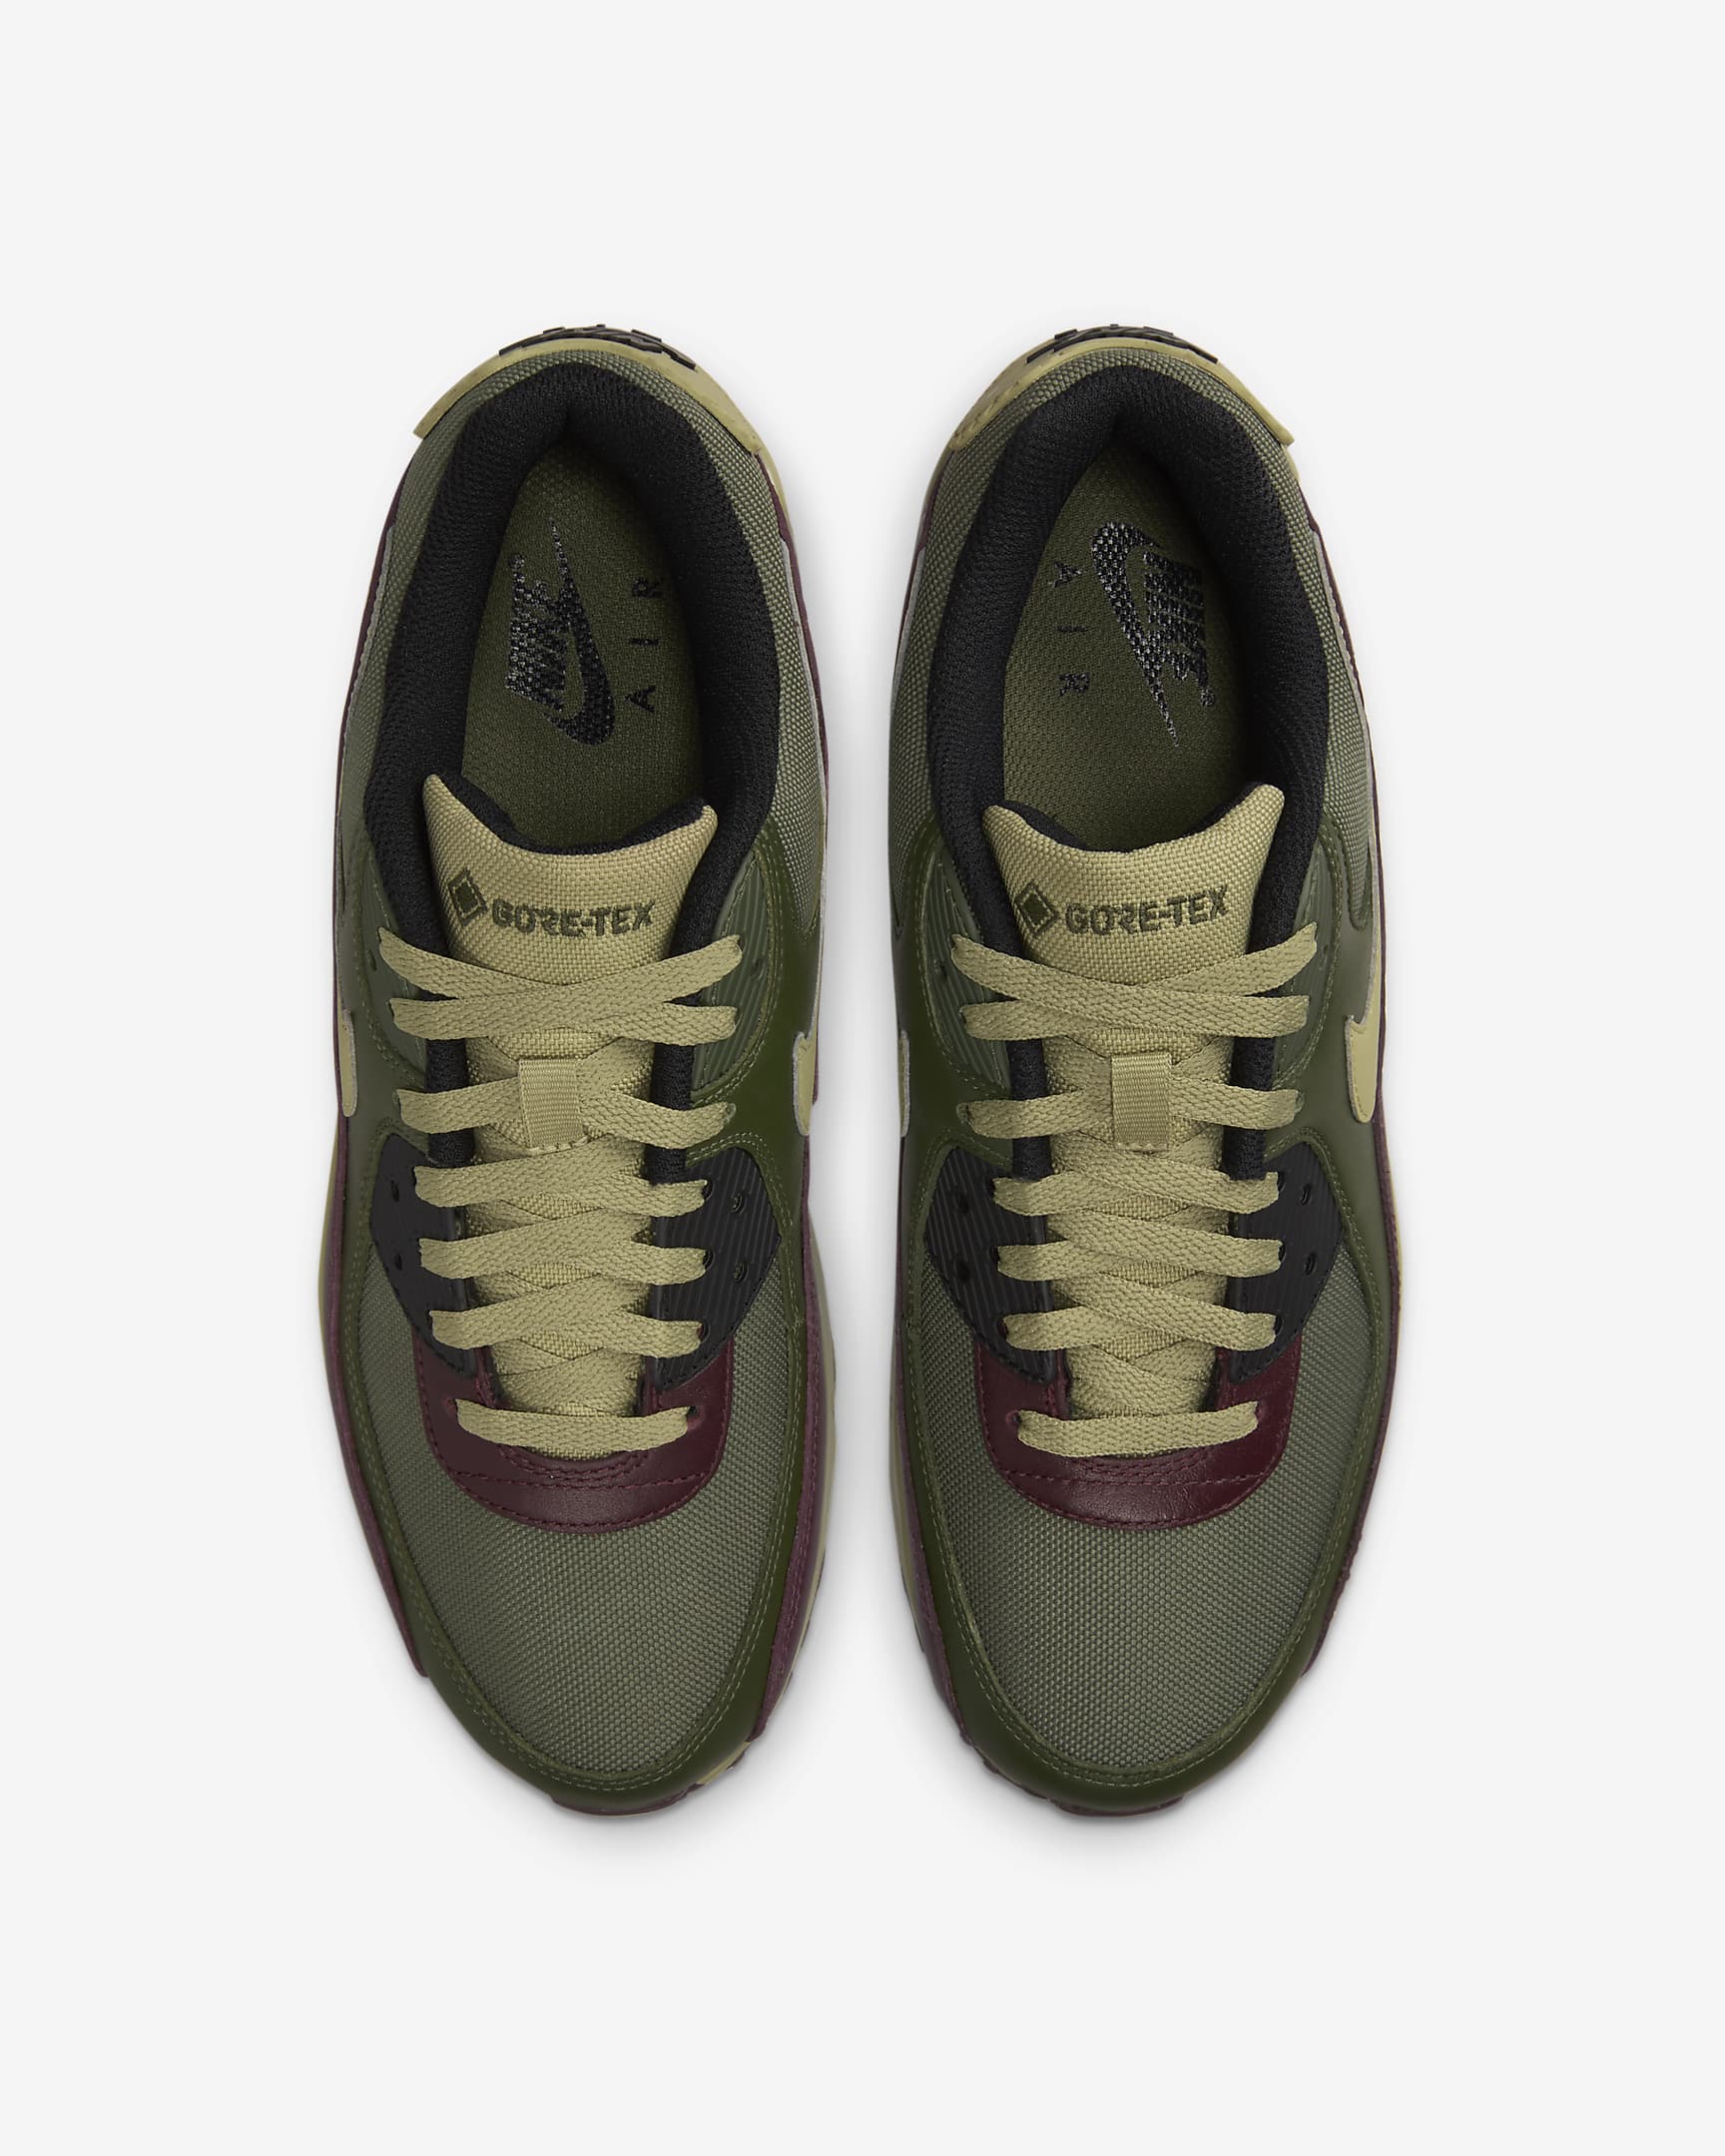 Sneakerhead Alert: Nike Air Max 90 GORE-TEX Men’s Shoes Review – Is It Worth the Splurge?